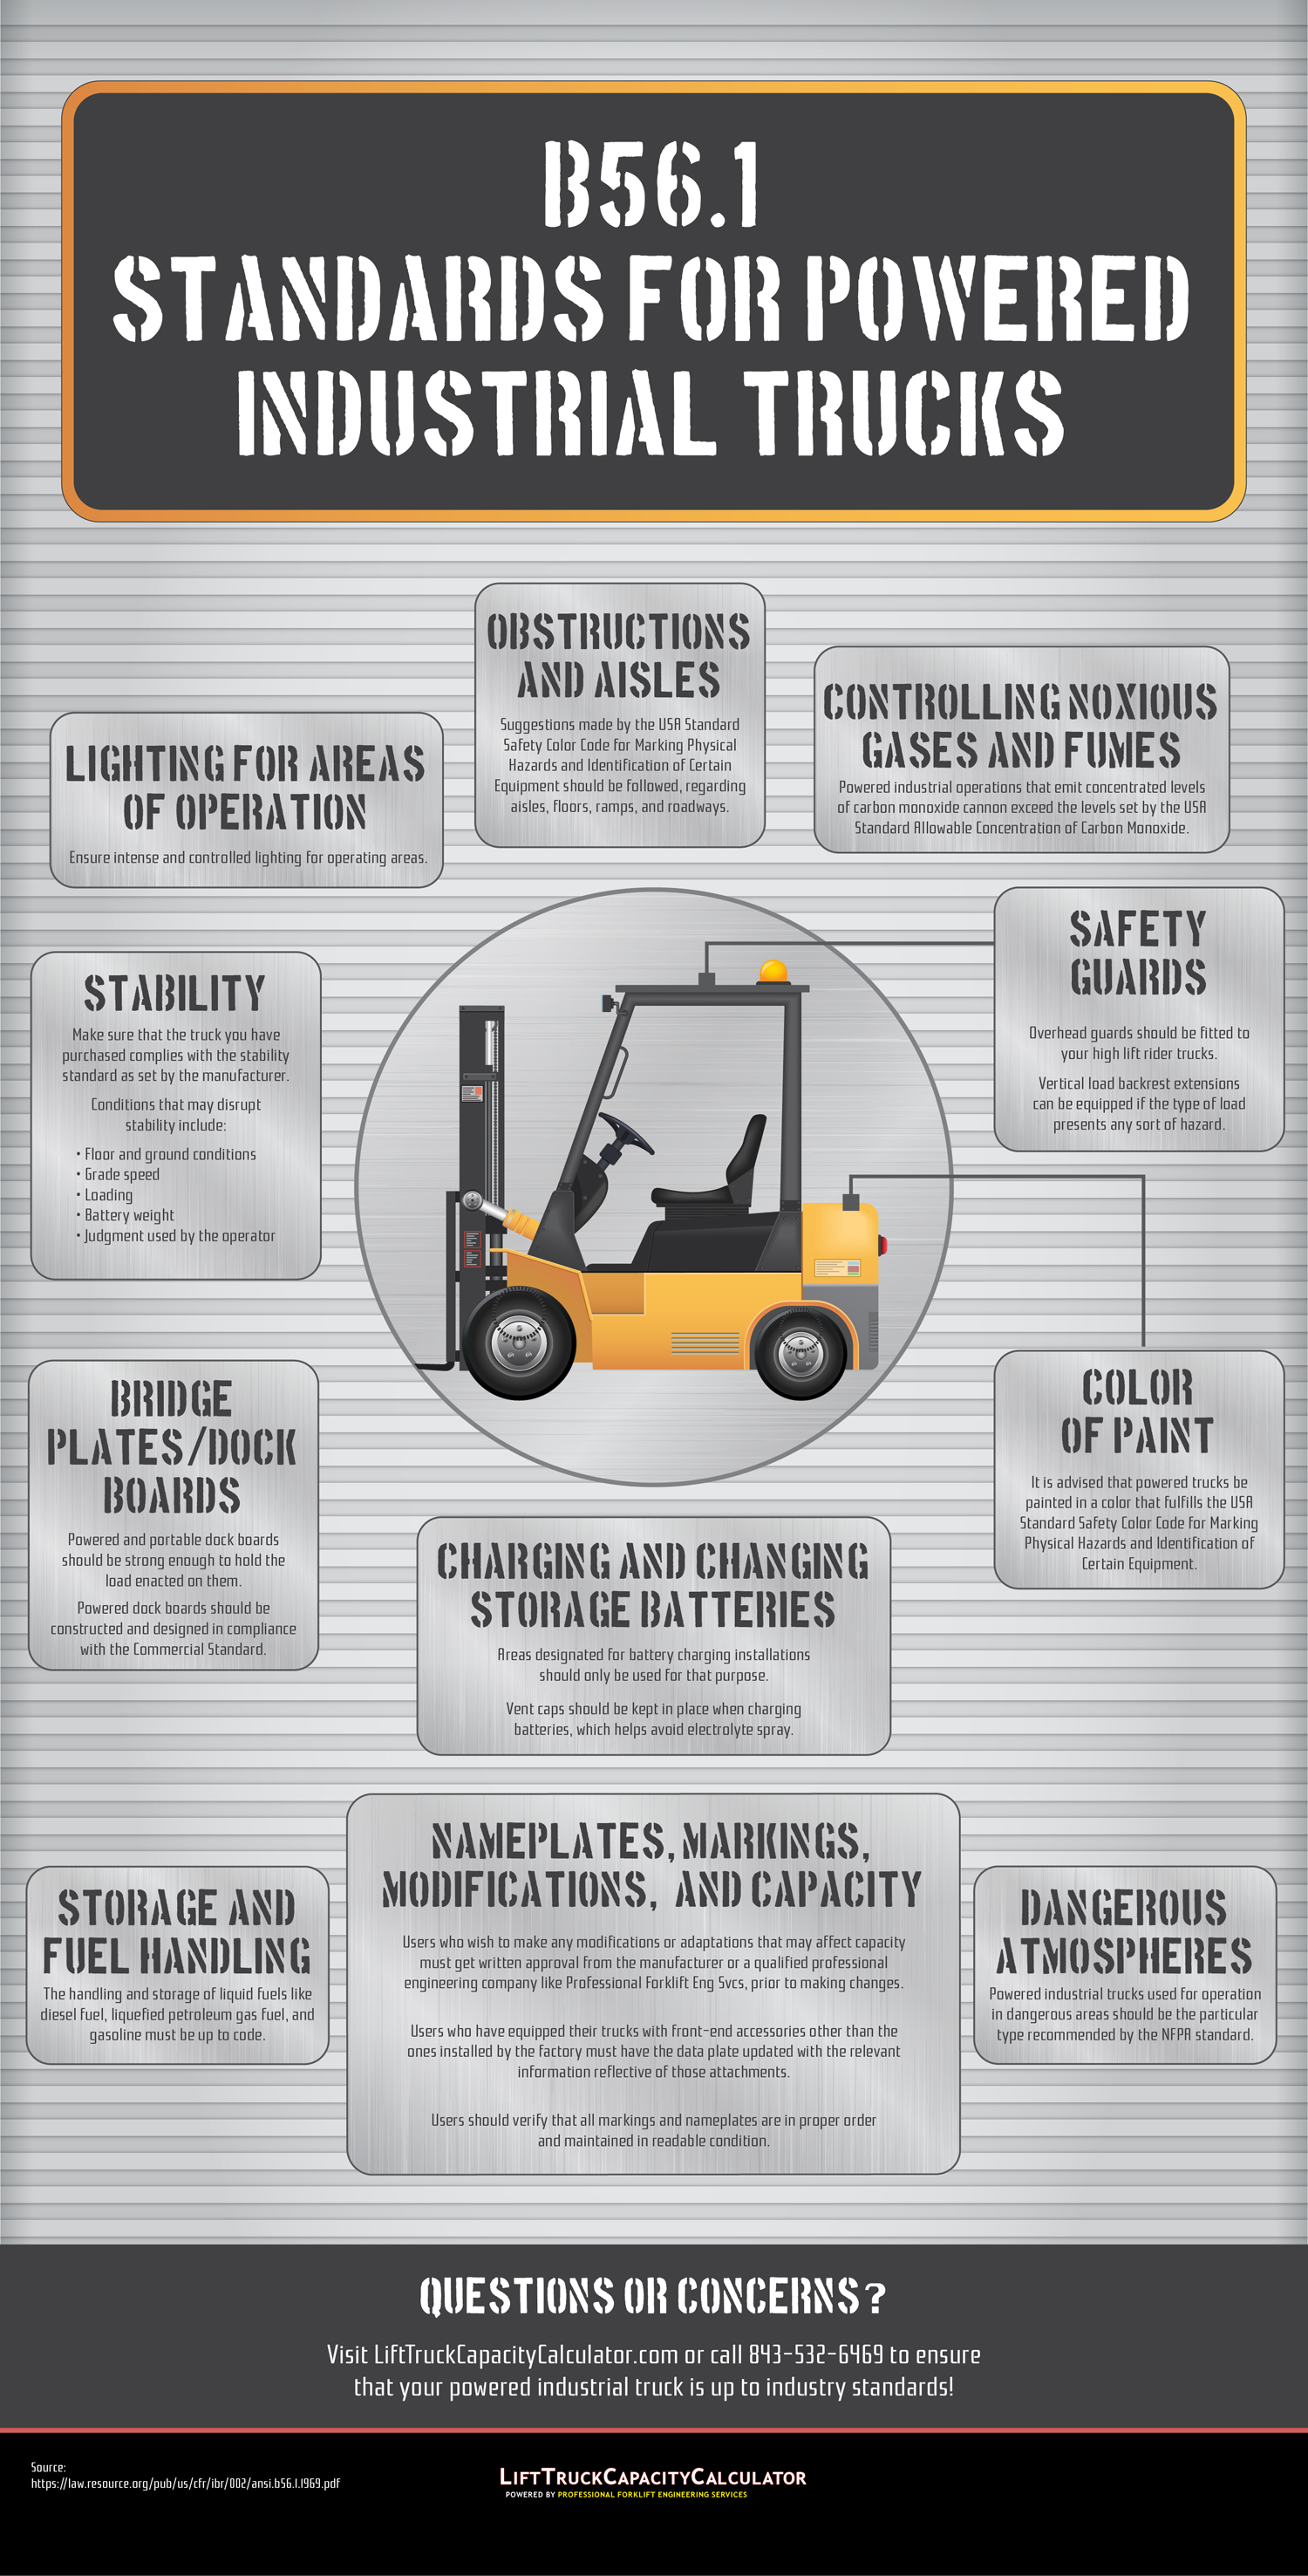 B56.1 Standards for Powered Industrial Trucks